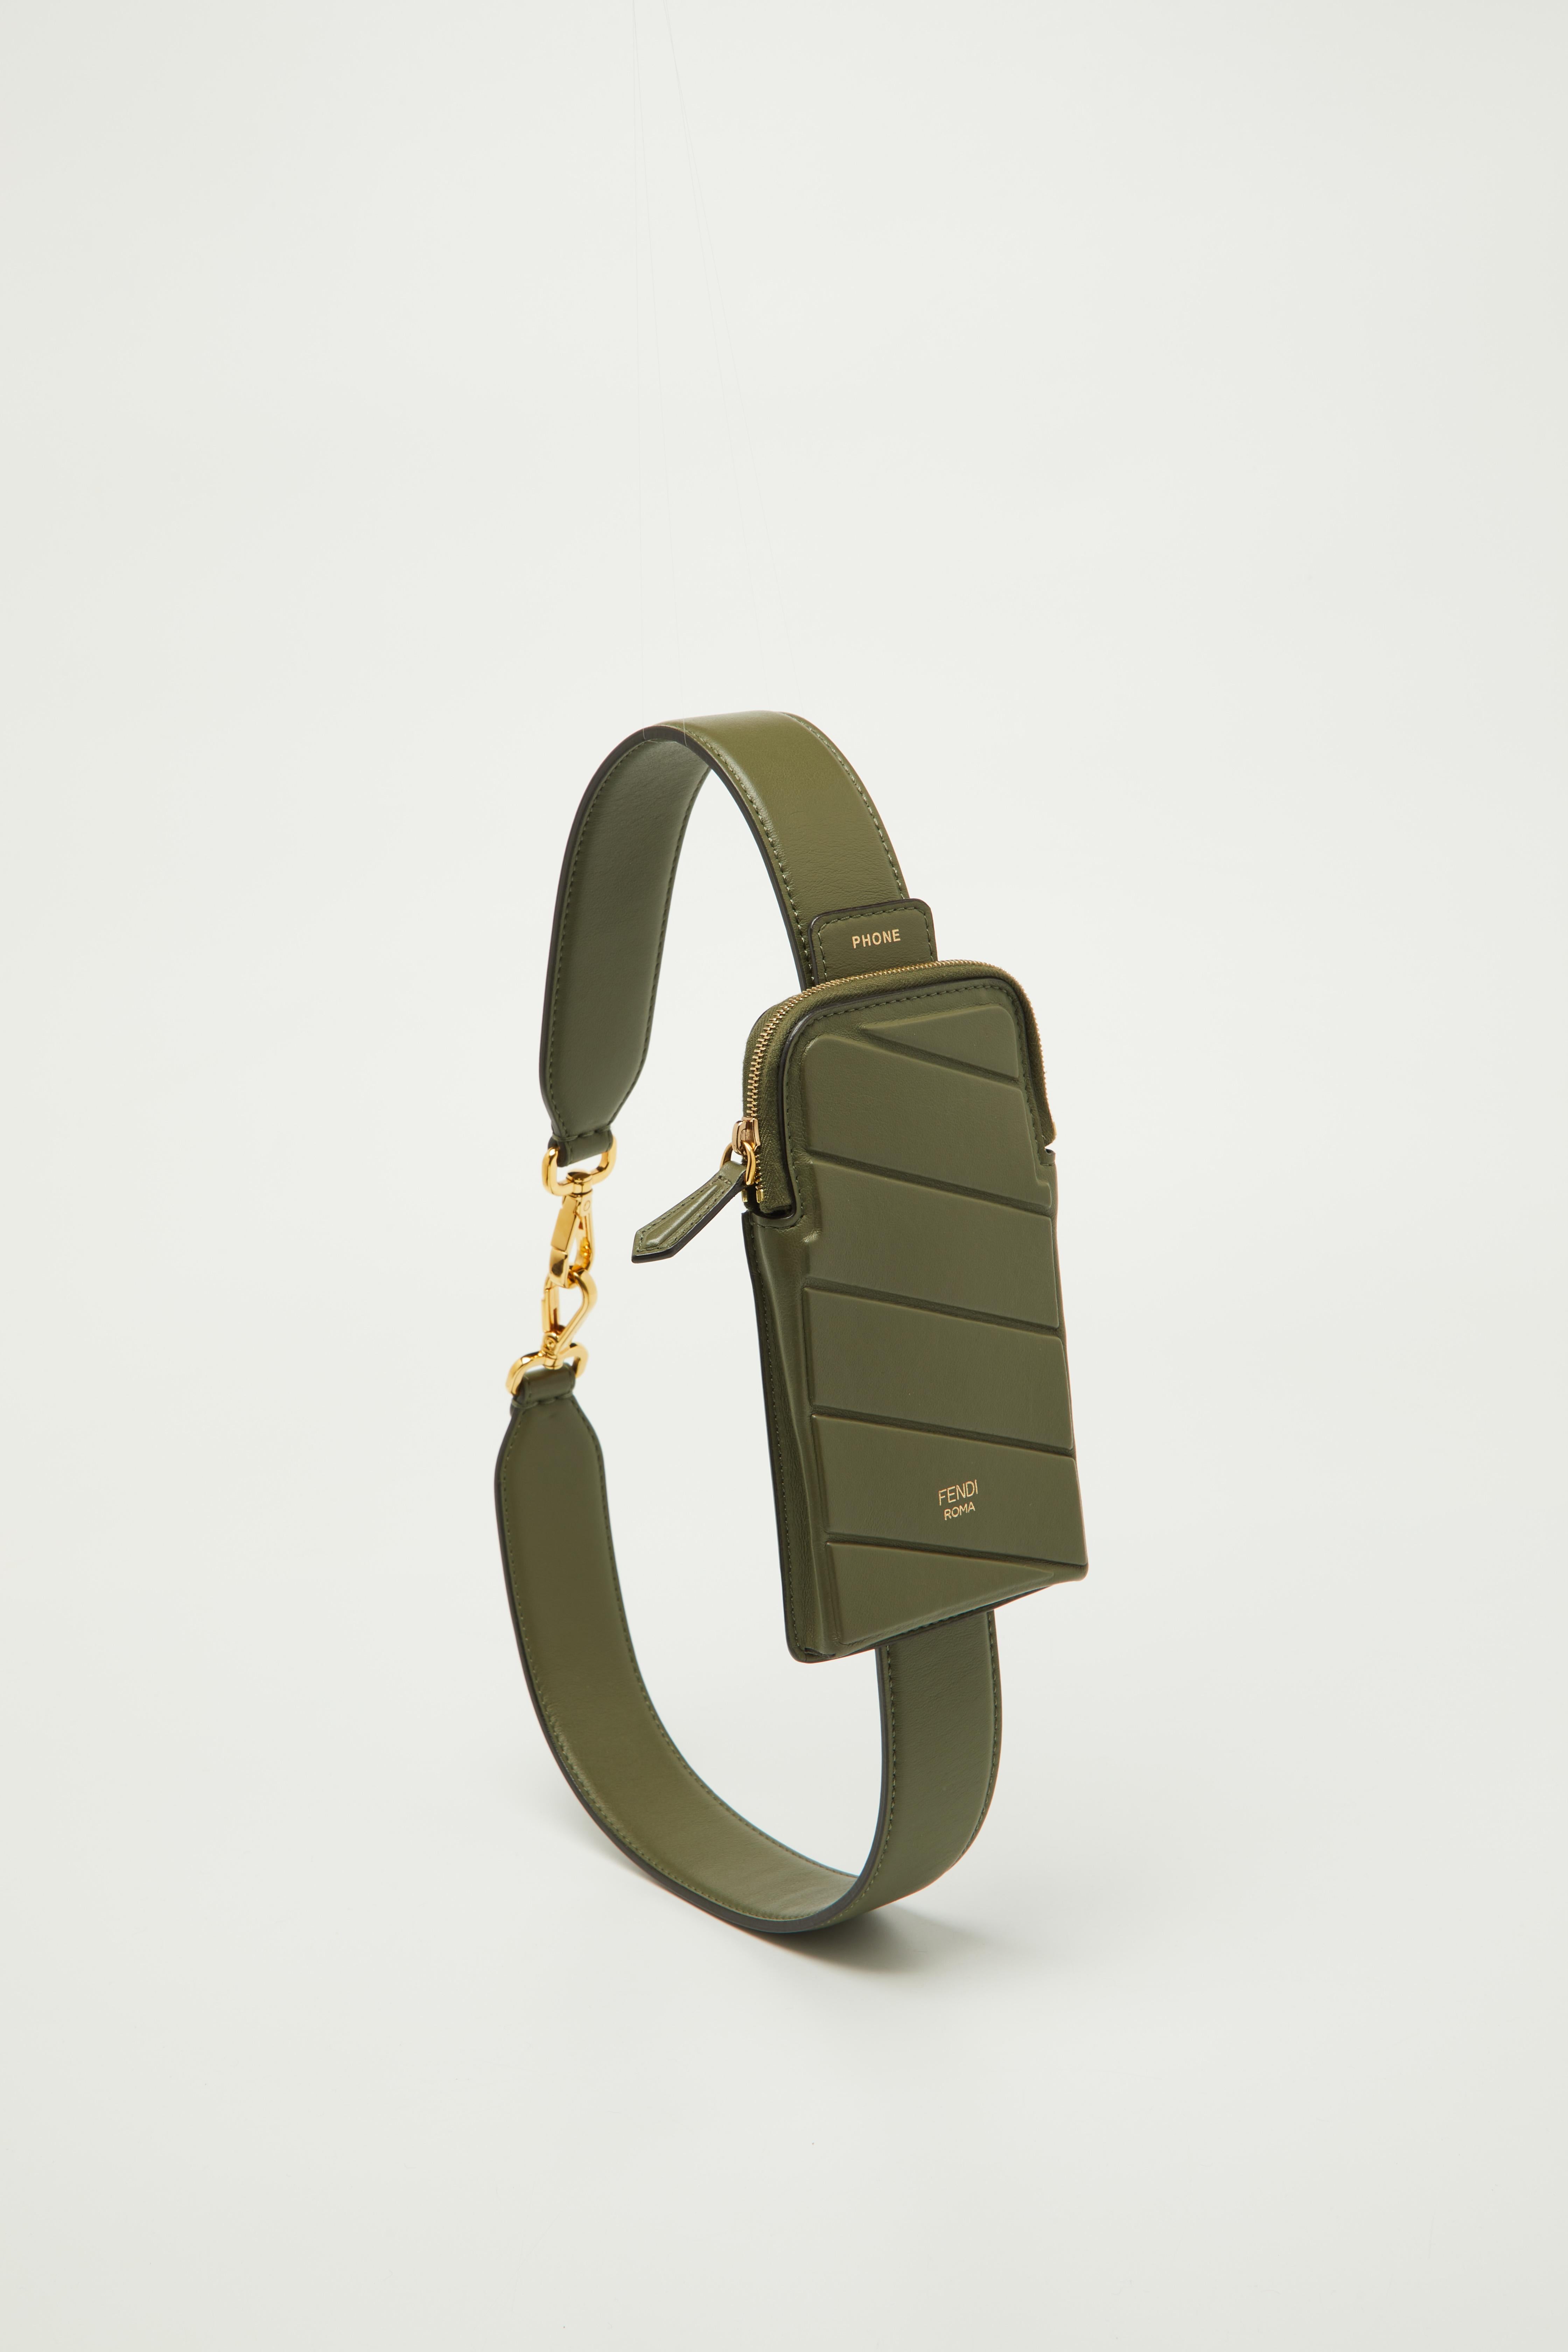 Fendi Olive Green Leather Cell Pocket Bag Strap In Excellent Condition For Sale In Dubai, Al Qouz 2